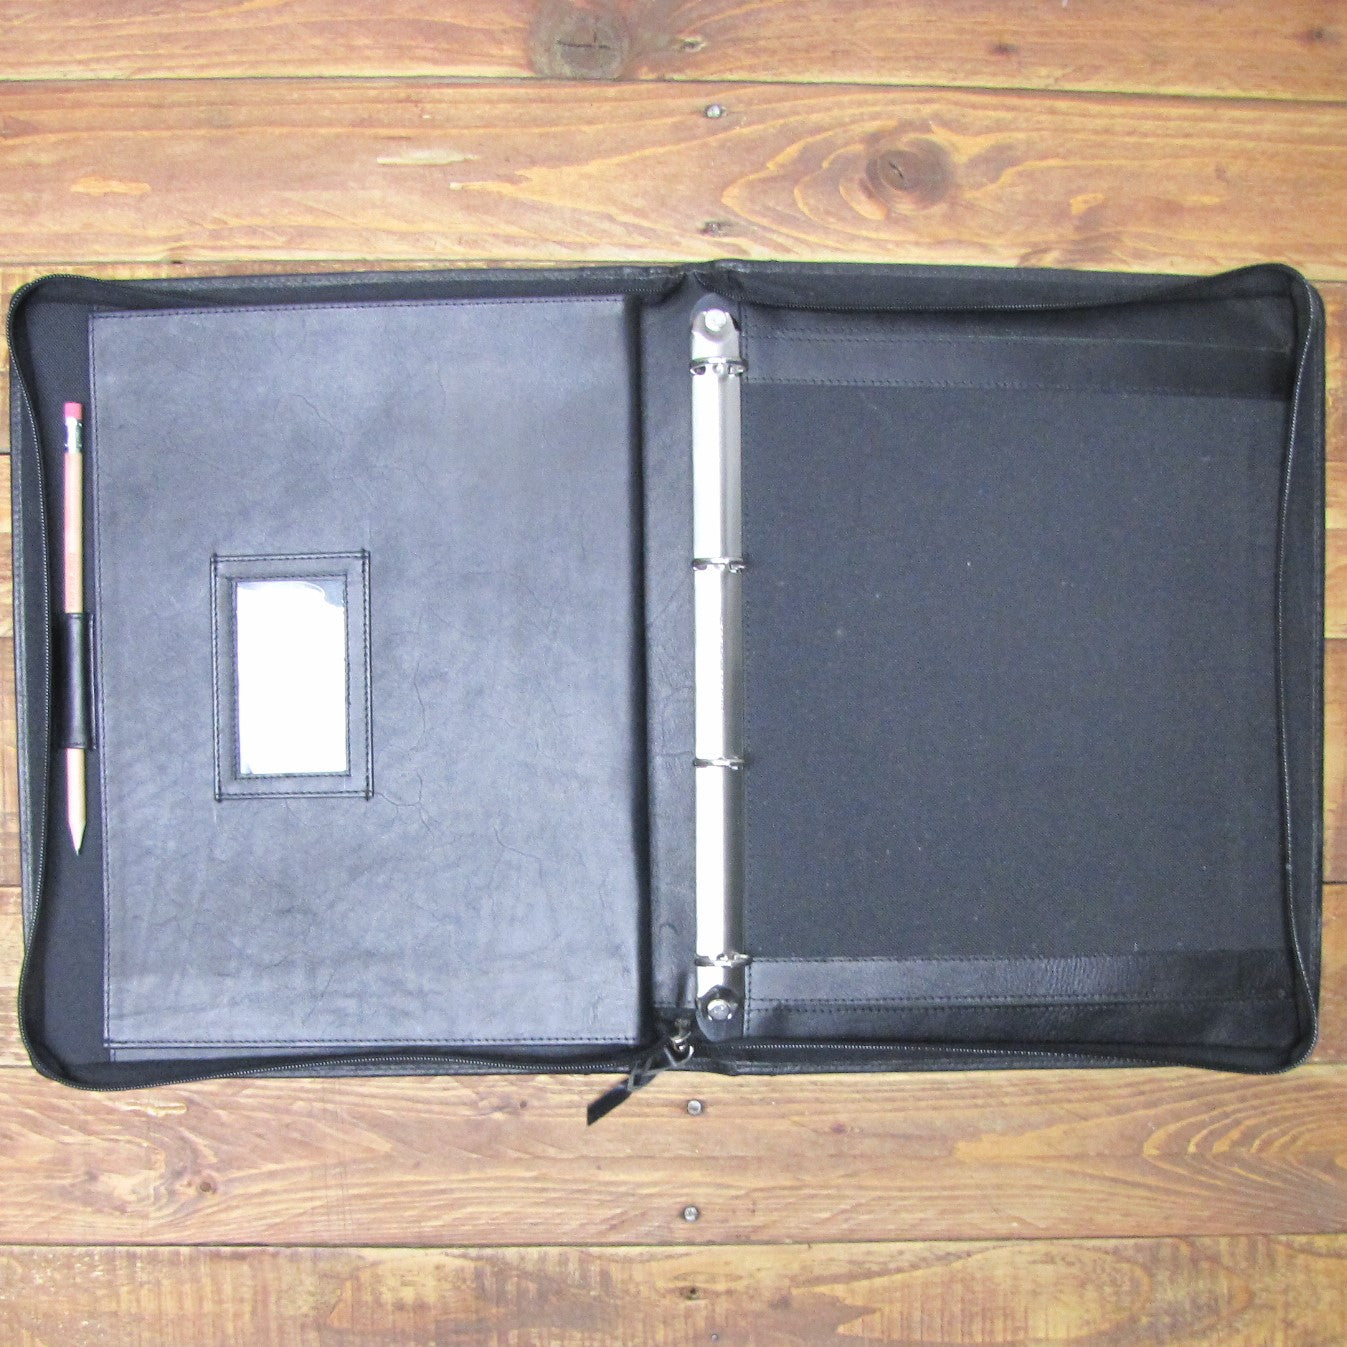 Black Leather Classic Car Document A4 Folder Portfolio IT08-BLK